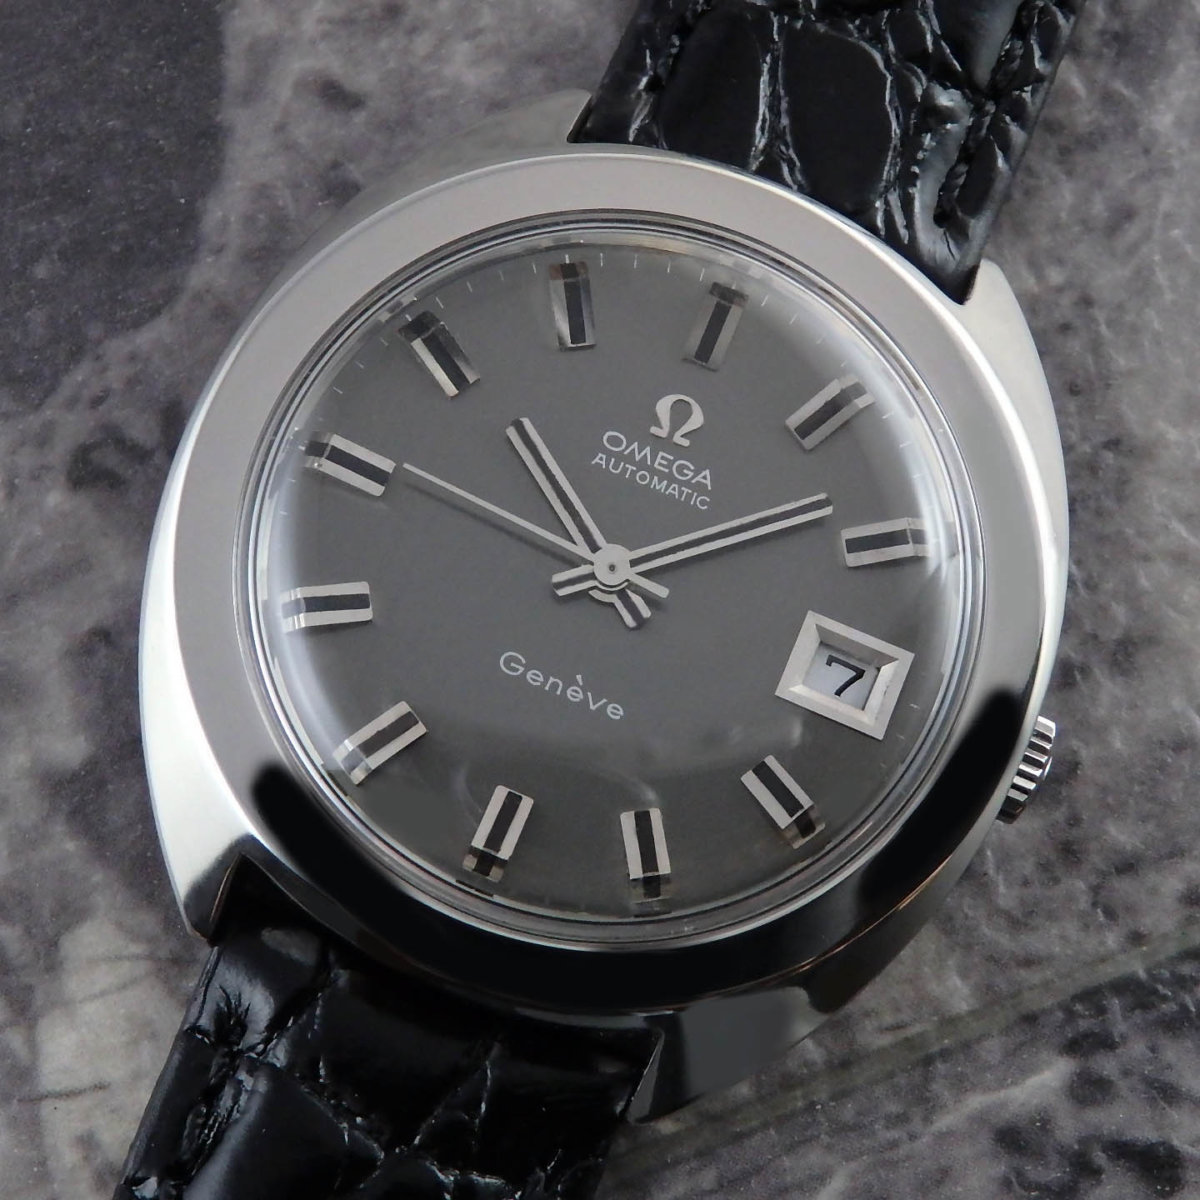 Omega St166 721 アンティーク メンズ腕時計 グレー Gray文字盤 オメガ 自動巻き